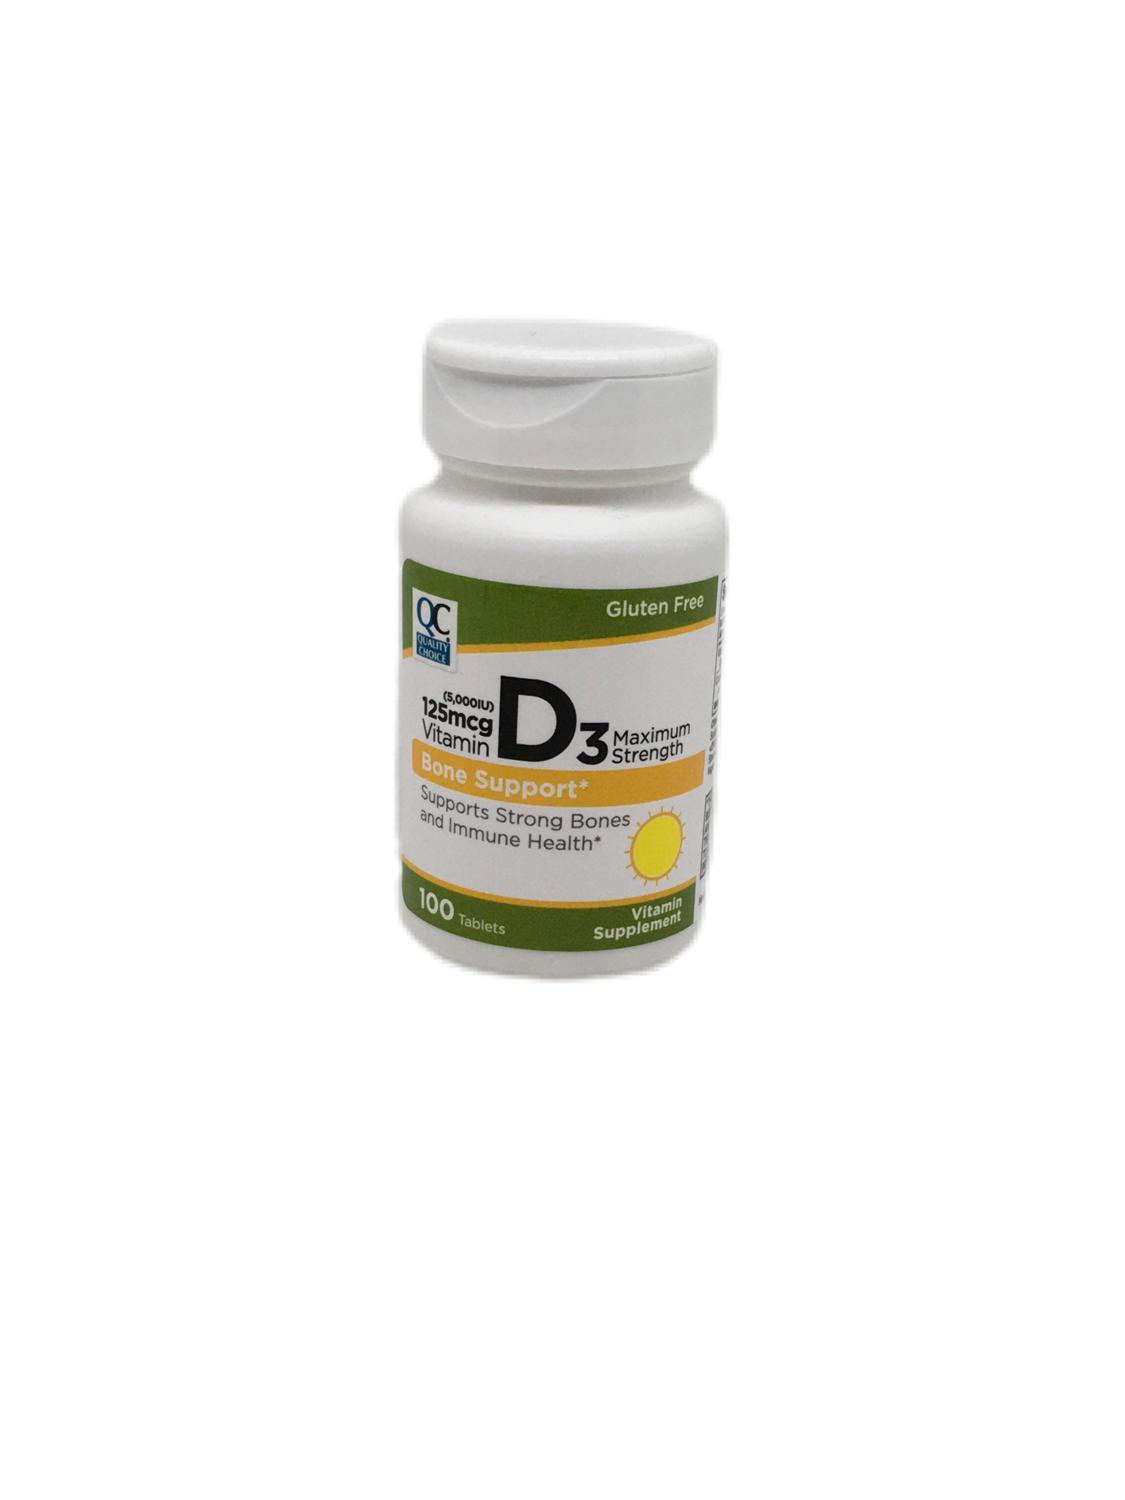 QC Vitamina D3 5,OOOIU